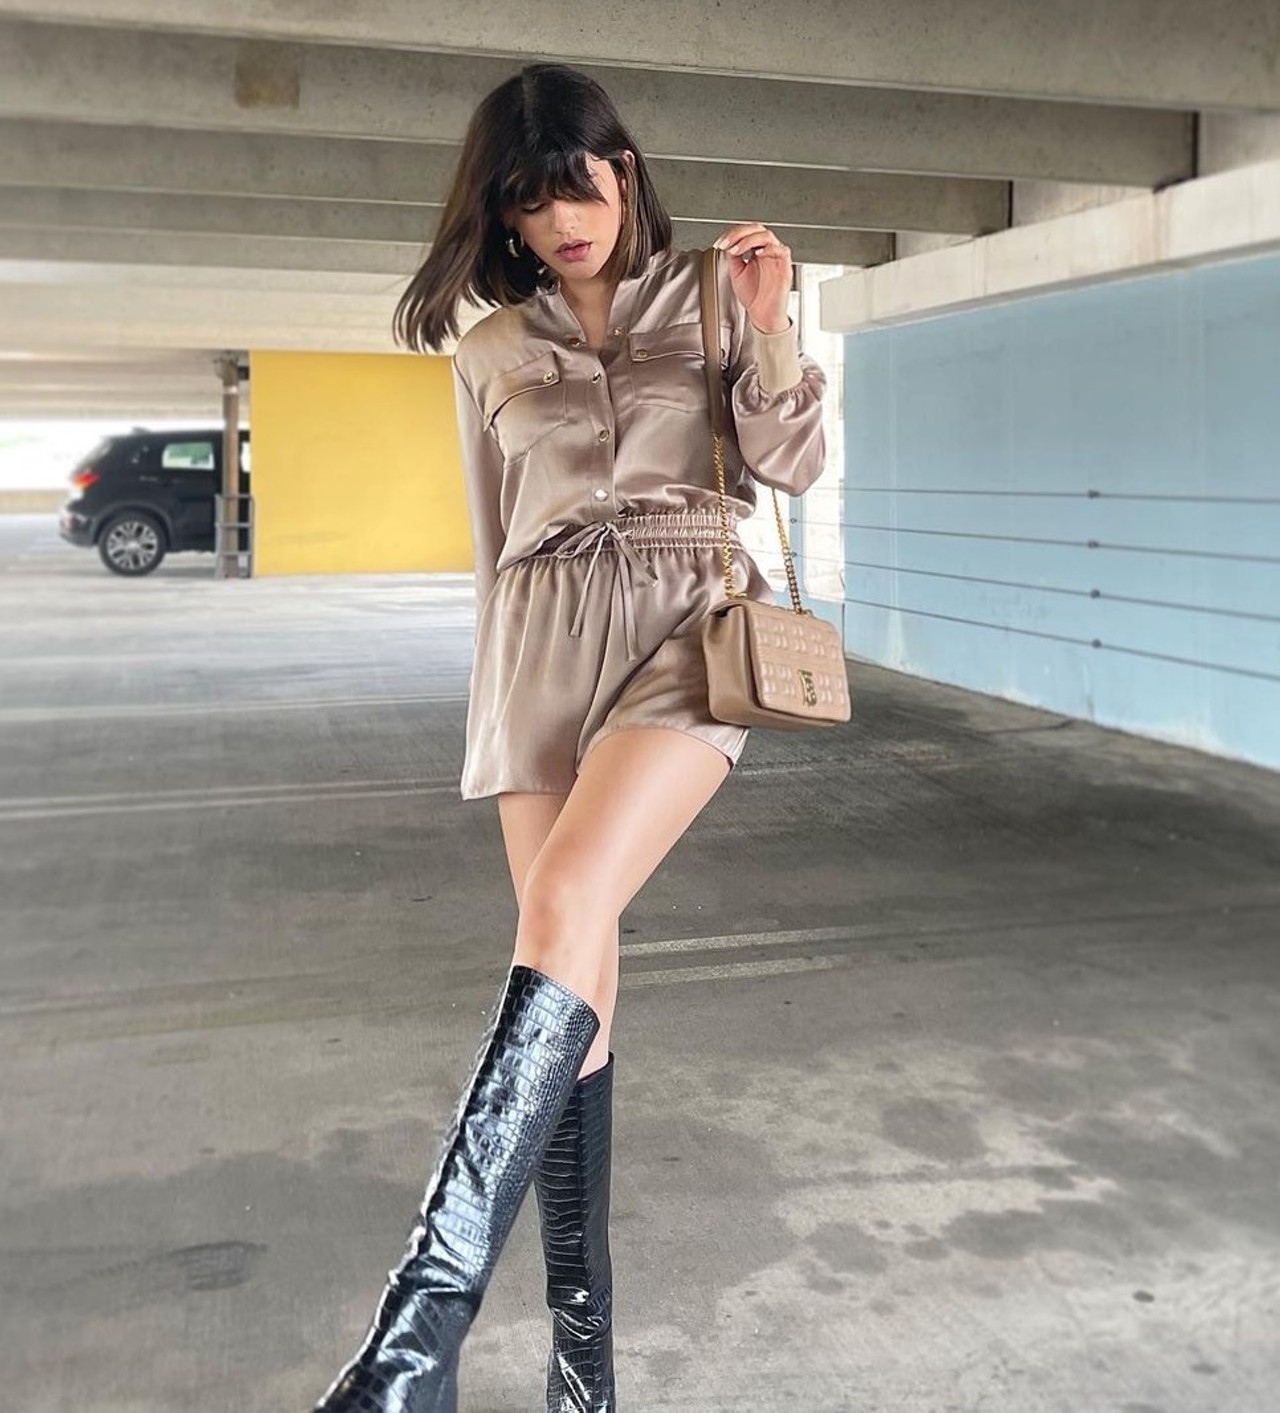 @vanneochoa
We’re pretty sure fashion blogger Vanne Ochoa snagged these snaps in a parking garage at North Star Mall. 
Photo via Instagram / vanneochoa